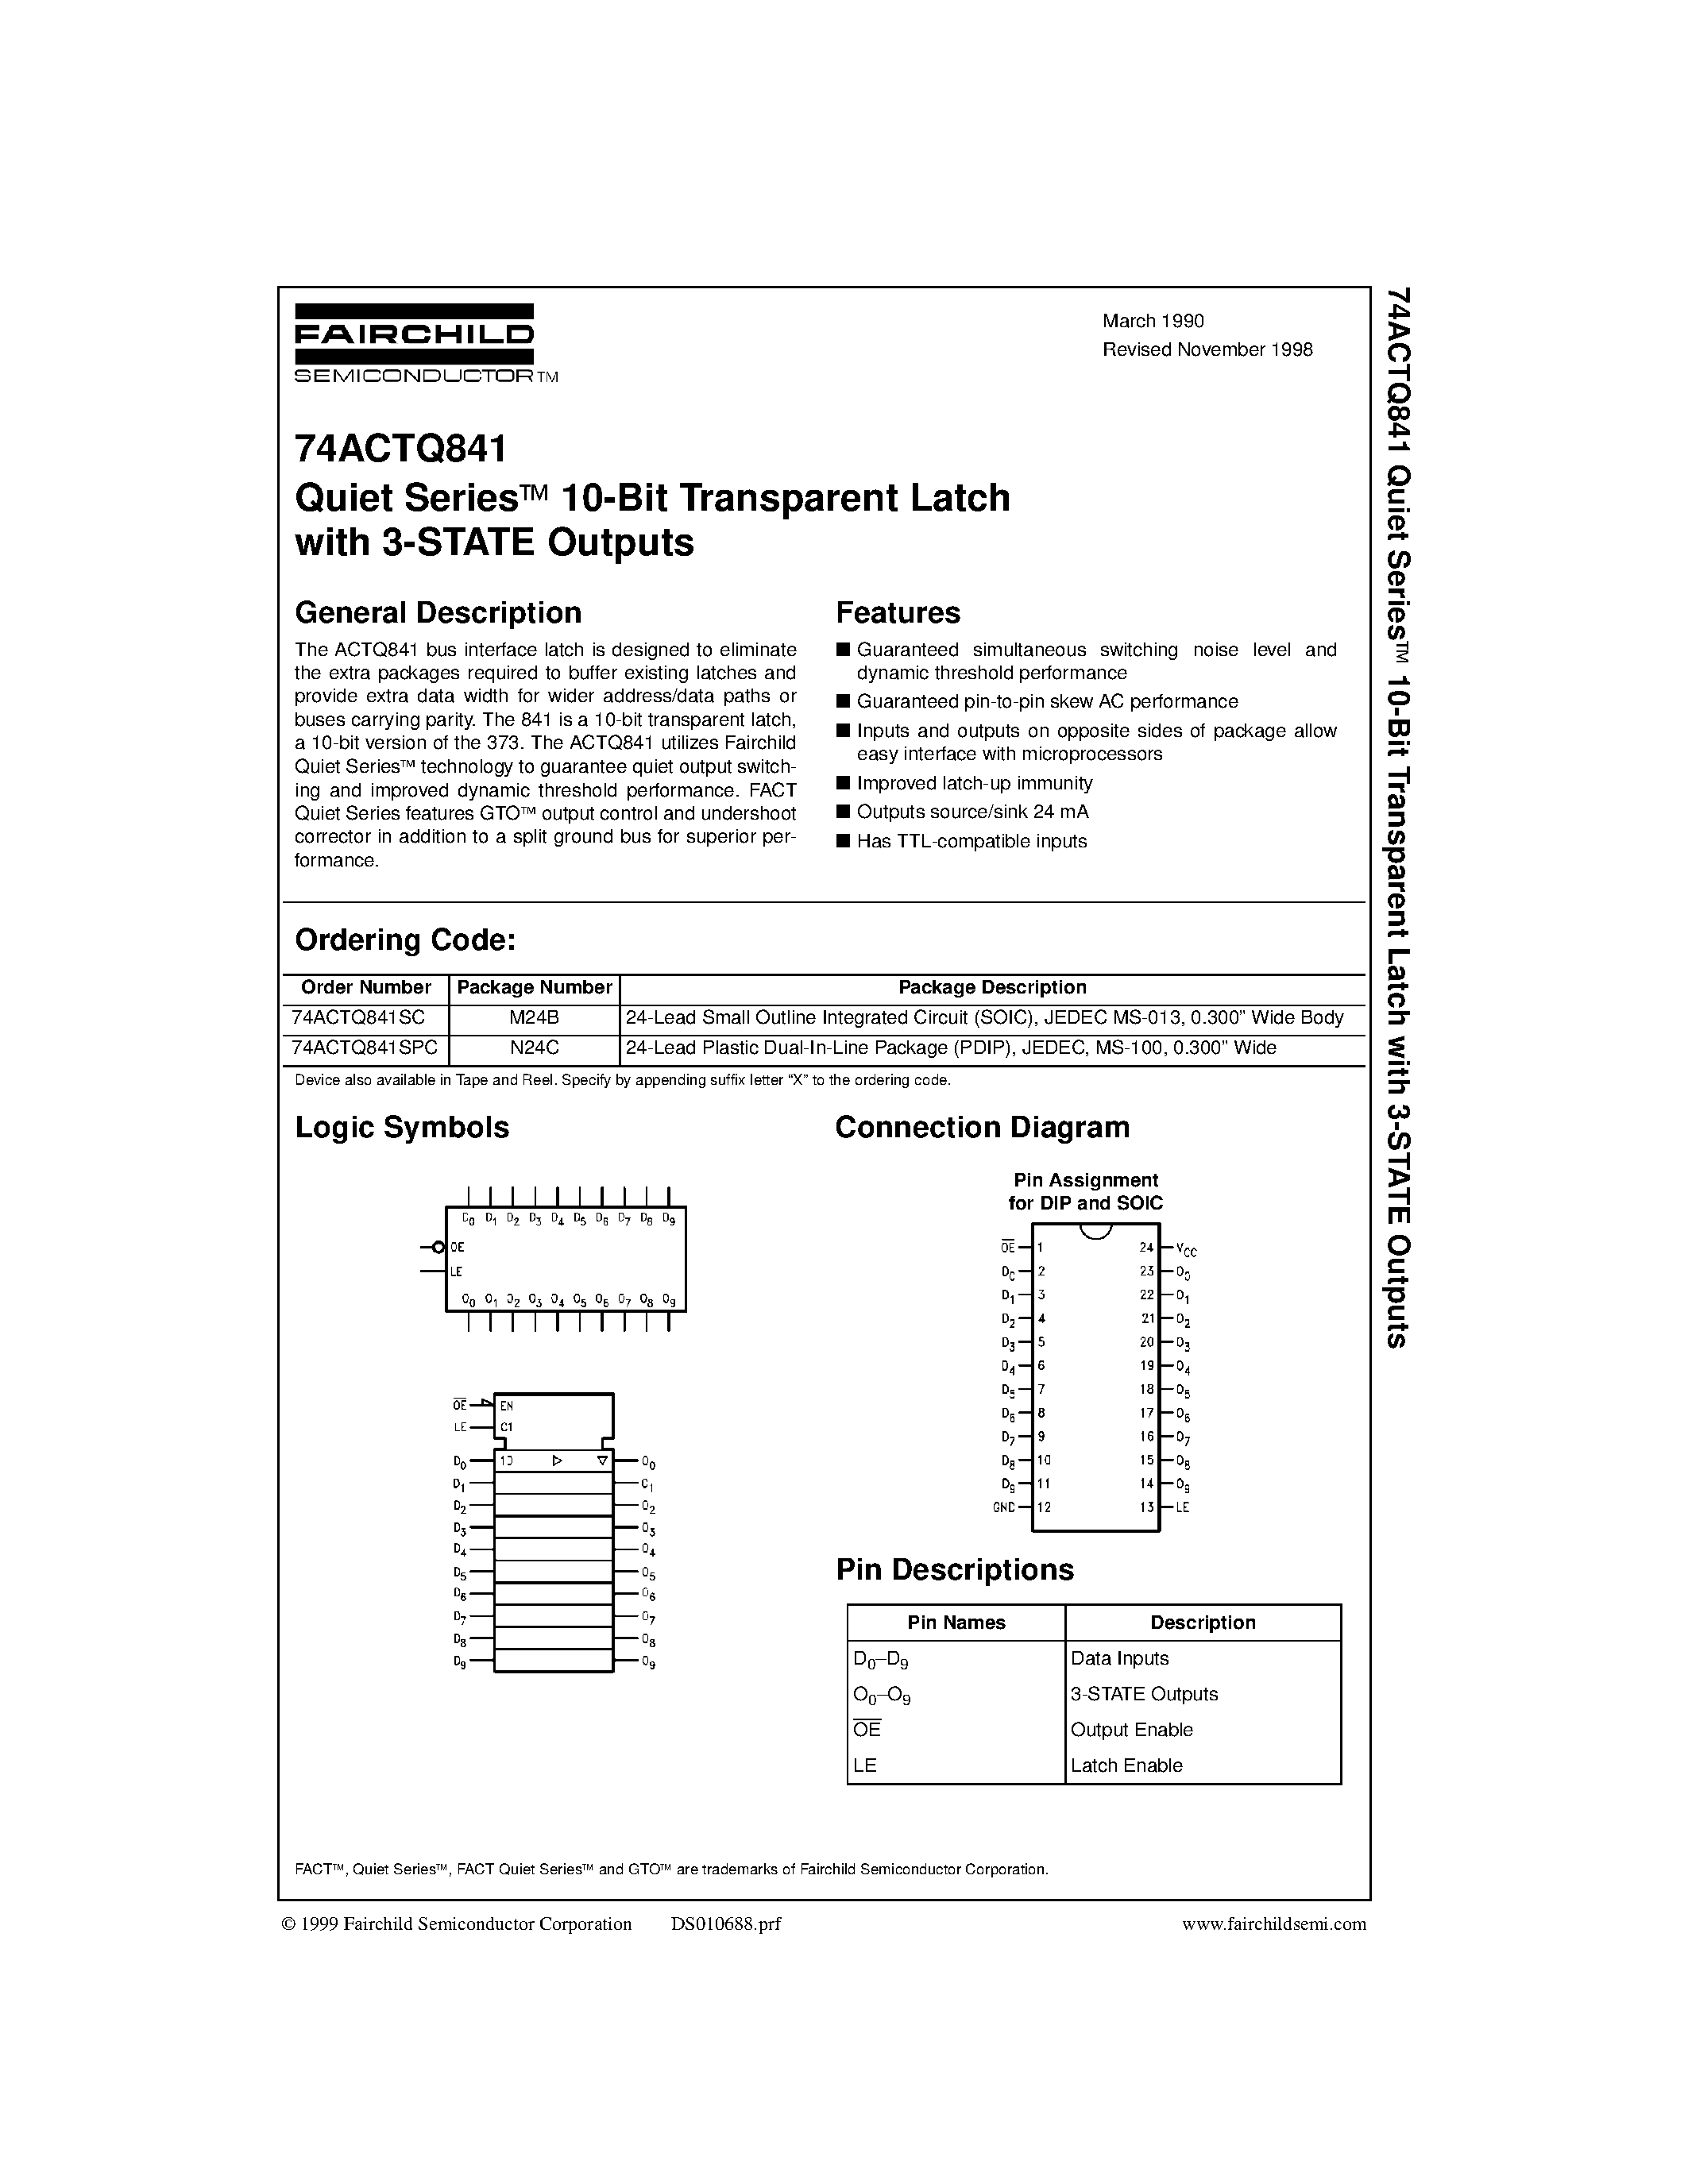 Даташит 74ACTQ841SPC - Quiet Seriesa 10-Bit Transparent Latch with 3-STATE Outputs страница 1